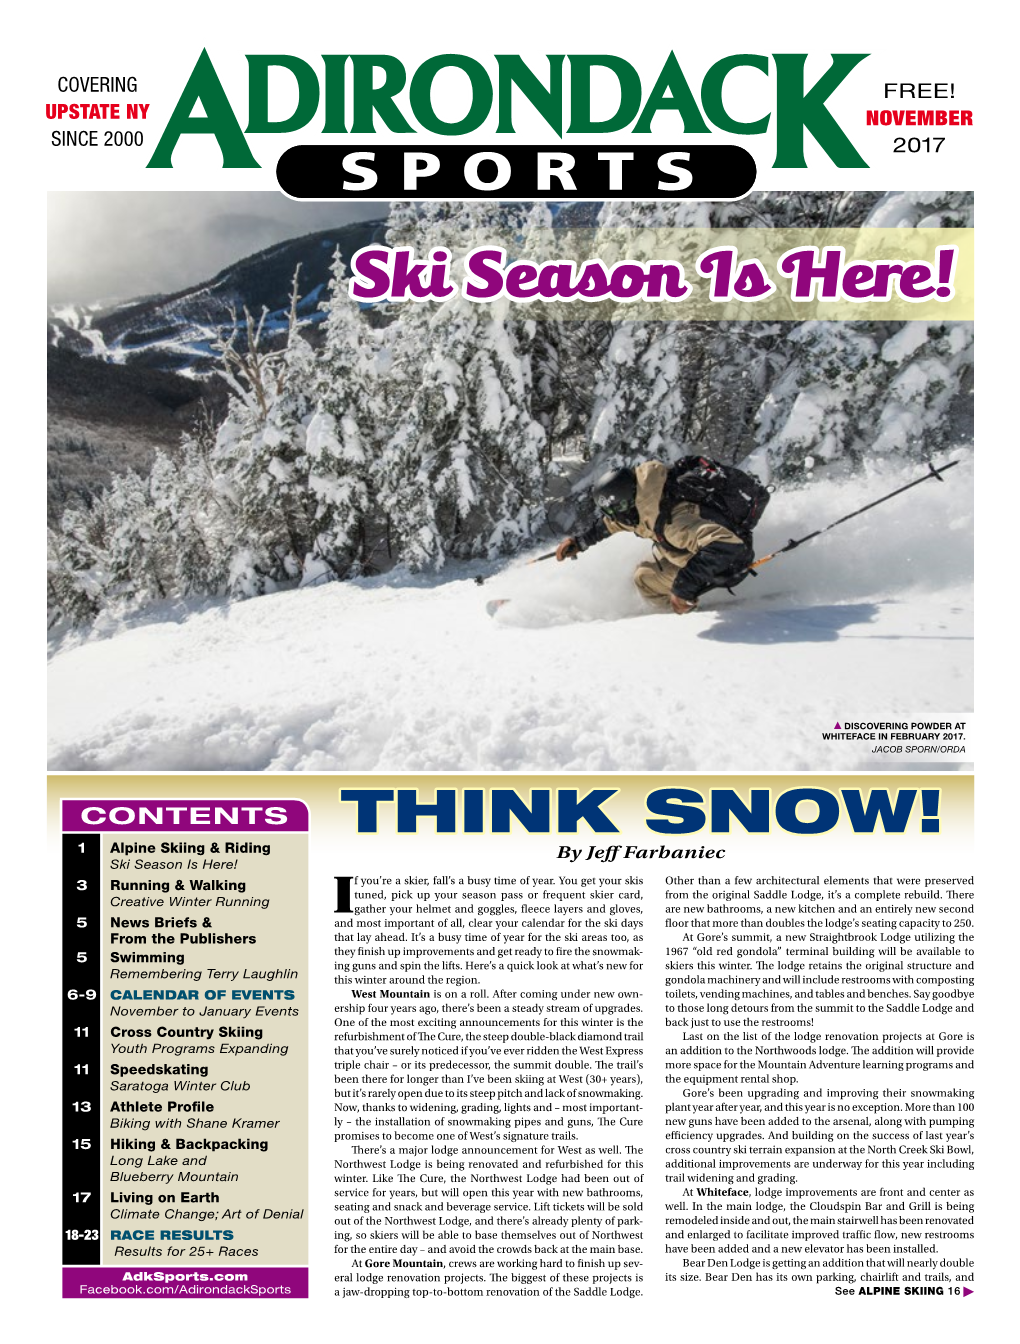 THINK SNOW! 1 Alpine Skiing & Riding by Jeff Farbaniec Ski Season Is Here! 3 Running & Walking F You’Re a Skier, Fall’S a Busy Time of Year